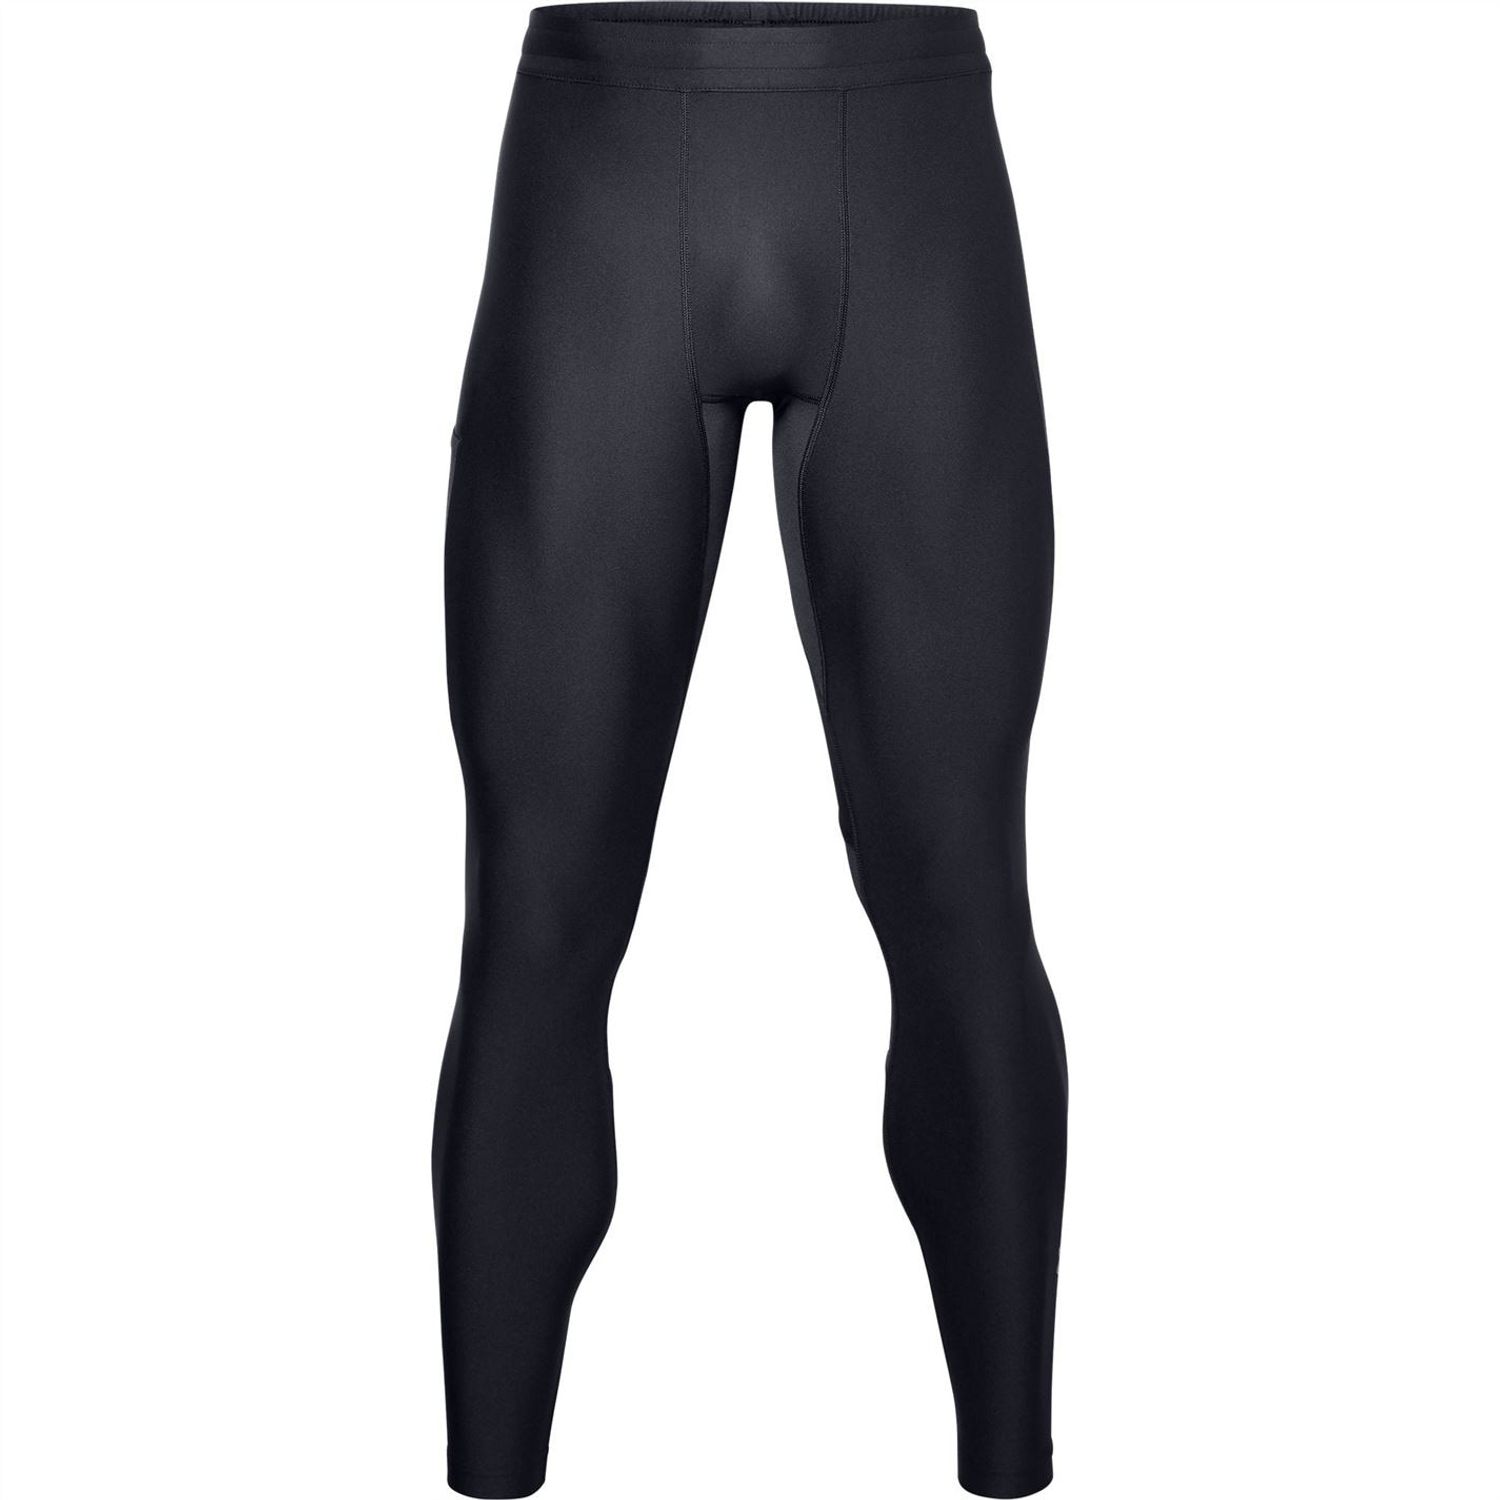 https://gtl-uk.prod.myauroraassets.com/p/221201/project-rock-heatgear-leggings-mens-fr1890848under-armour-project-rock-heatgear-leggings-mens-fr1890848.jpg?t=rp&w=1500&h=1500